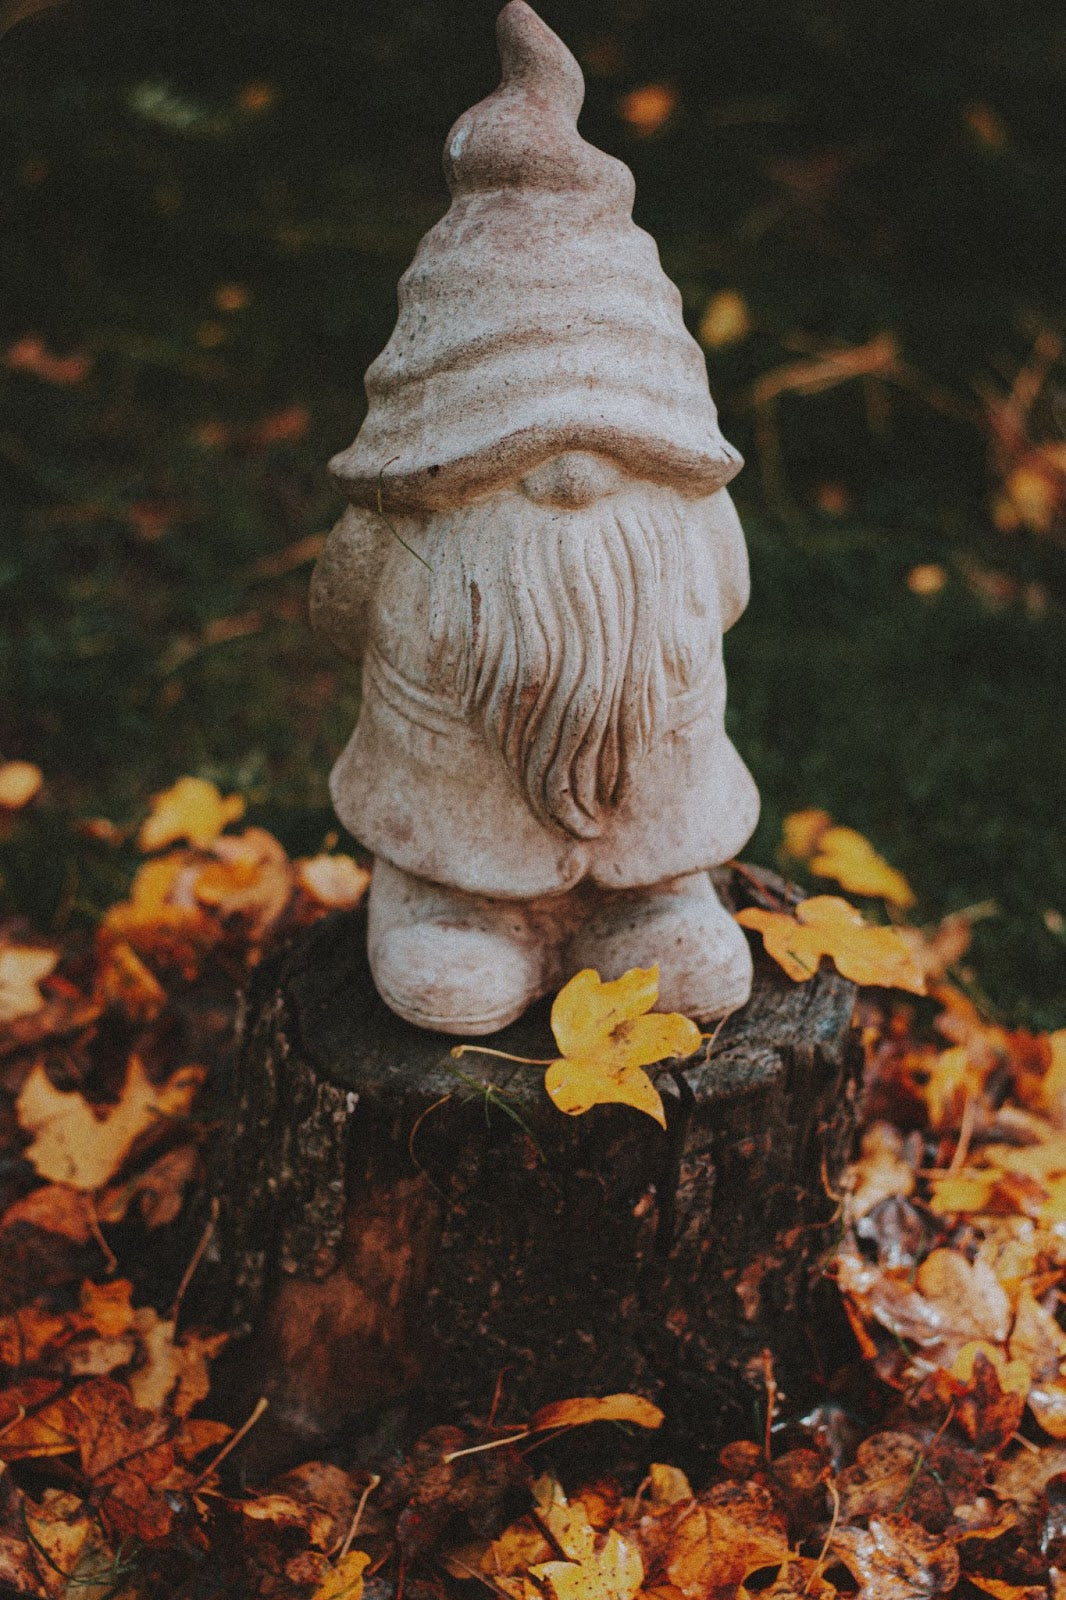 Outdoor gnome figurine